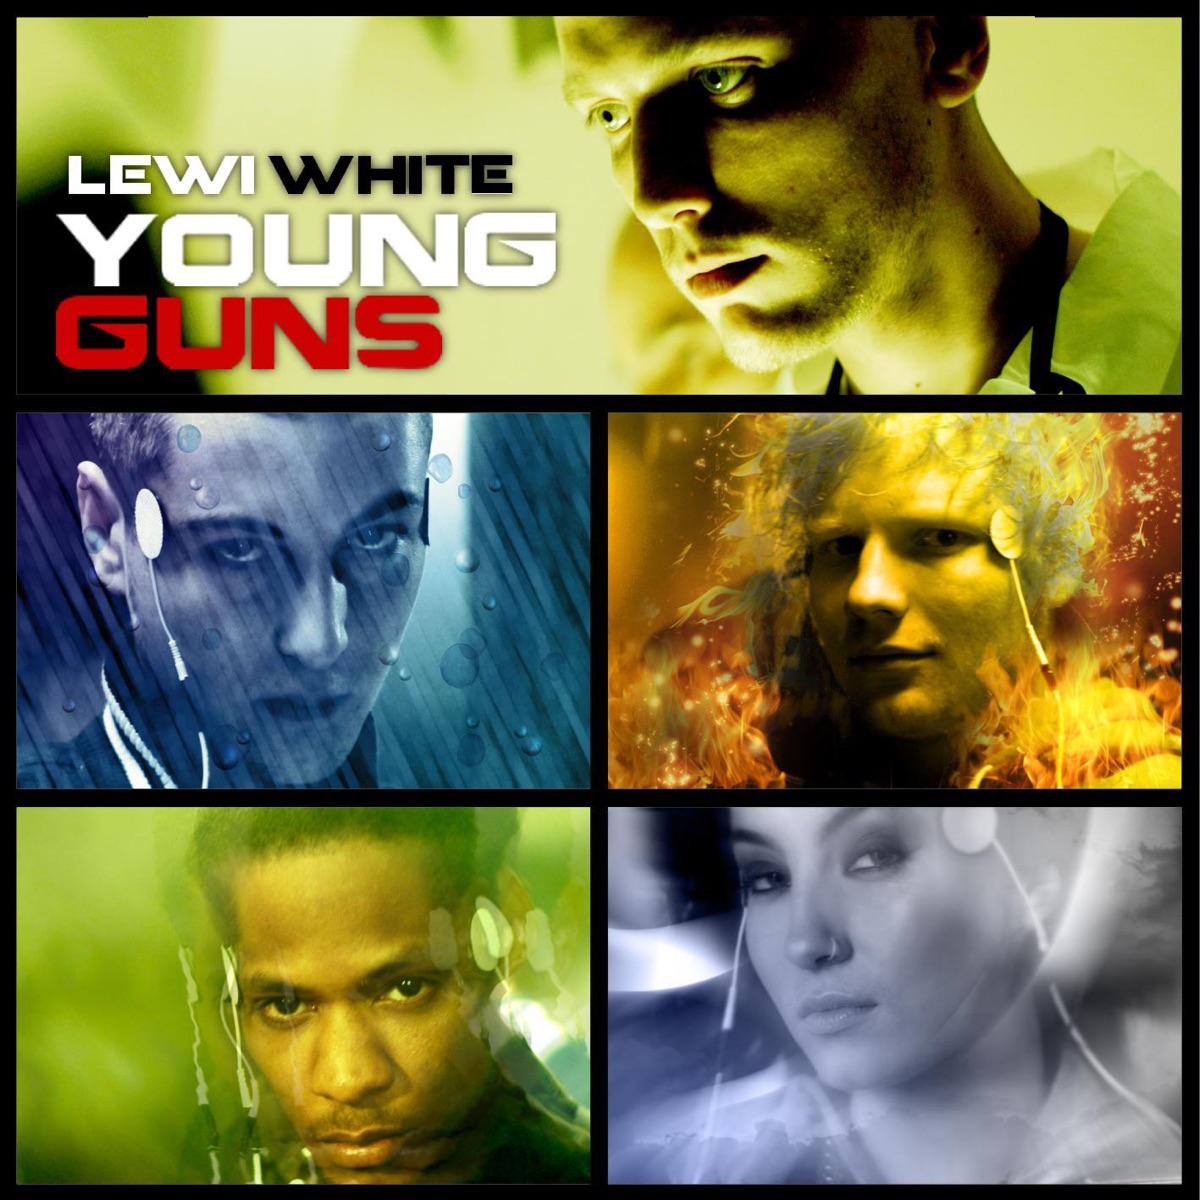 Lewi White ft. featuring Ed Sheeran, Yasmin, Griminal, & Devlin Young Guns cover artwork